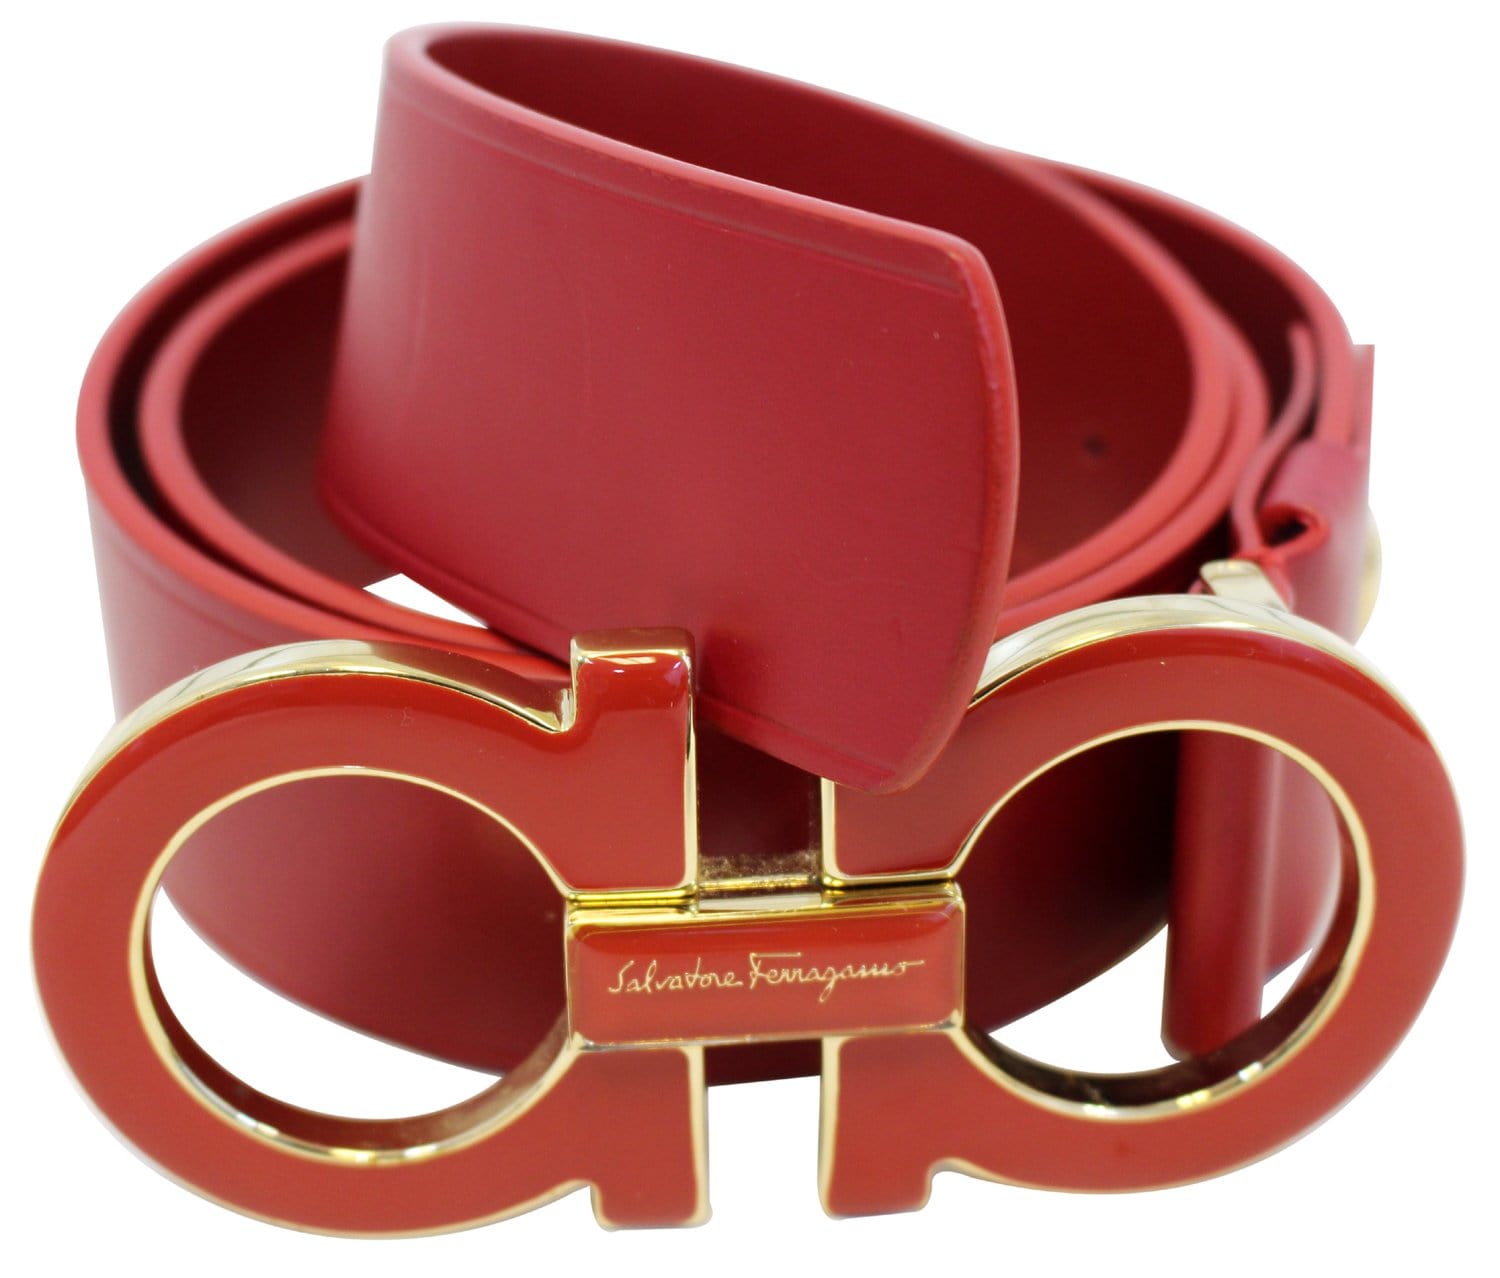 Salvatore Ferragamo, Accessories, Ferragamo Belt Red And Gold